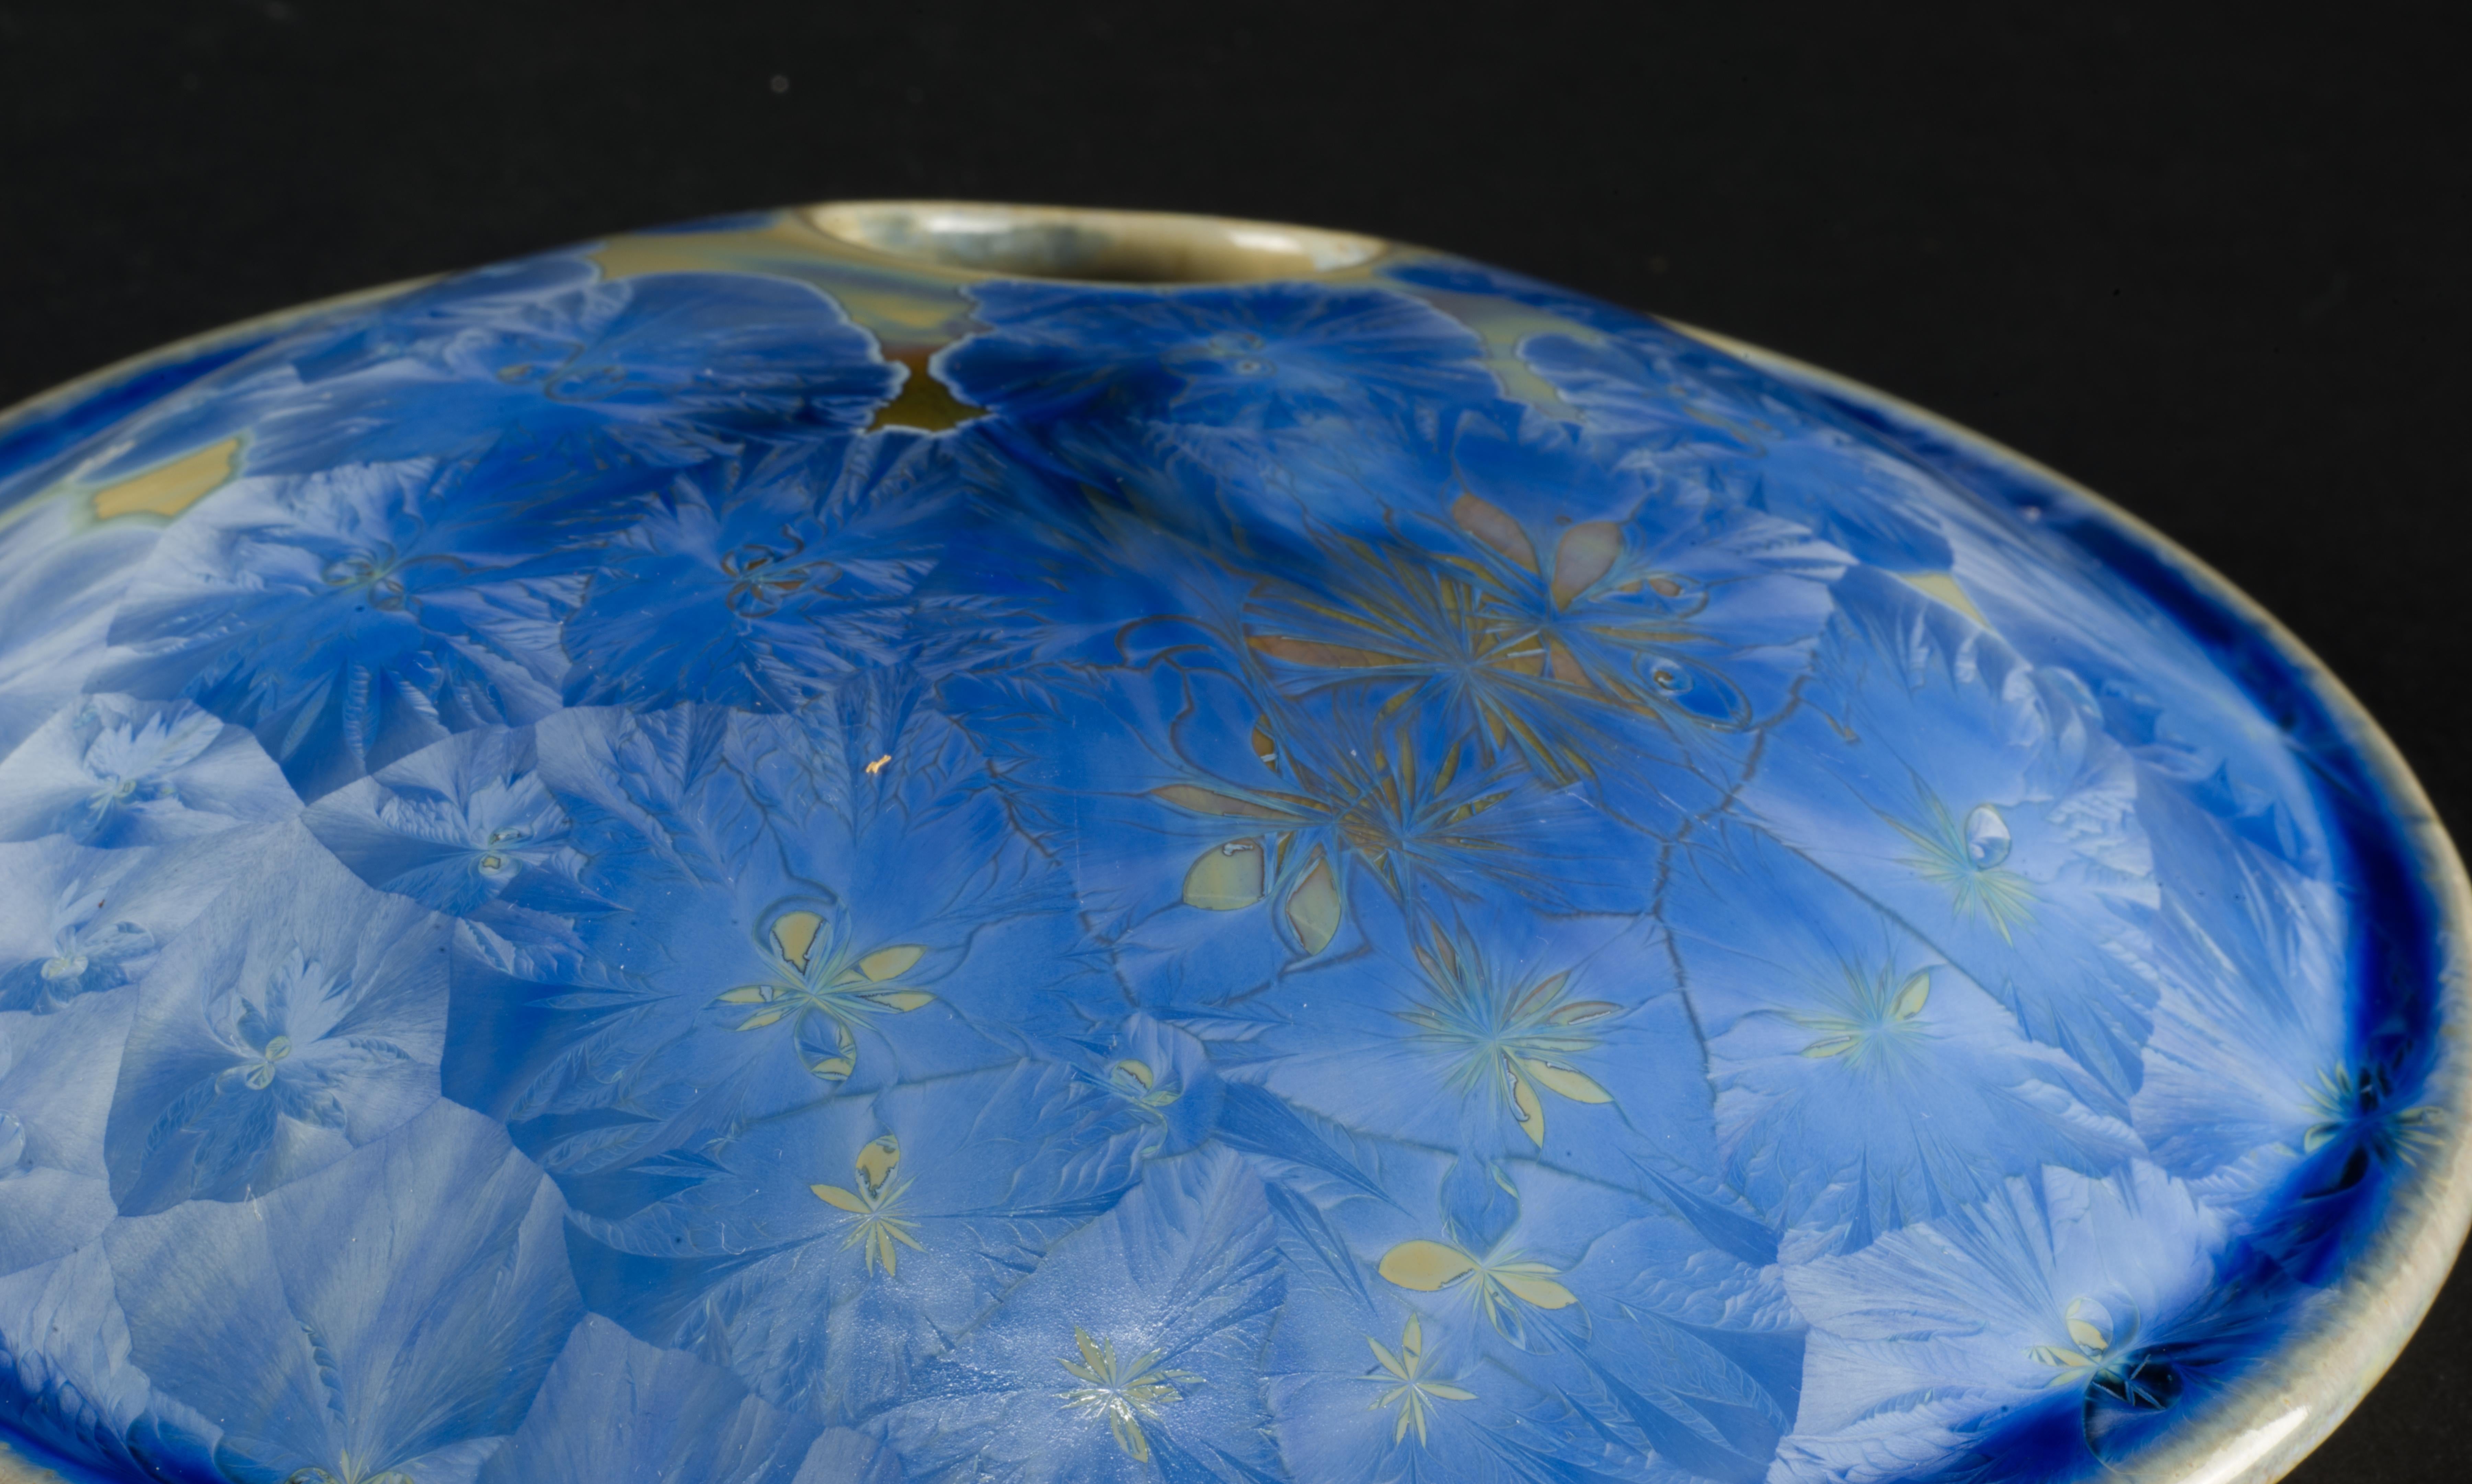 Crystalline Glaze Ceramic Ikebana Vase, Blue, American Studio Pottery, 2003 For Sale 6